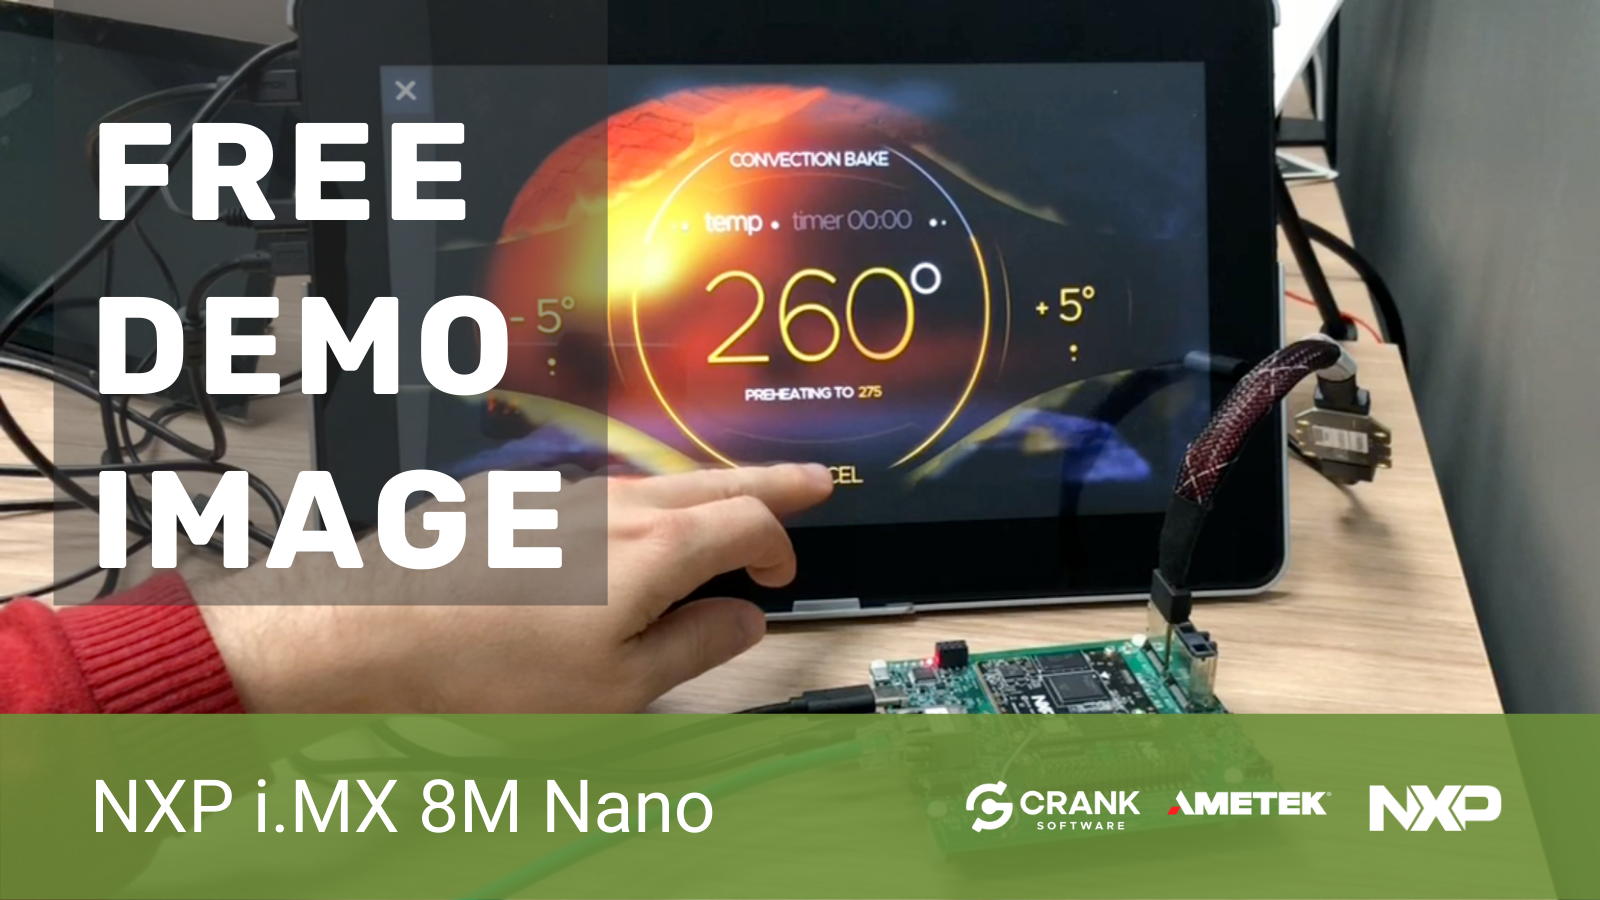 NXP iMX 8M Nano demo social image